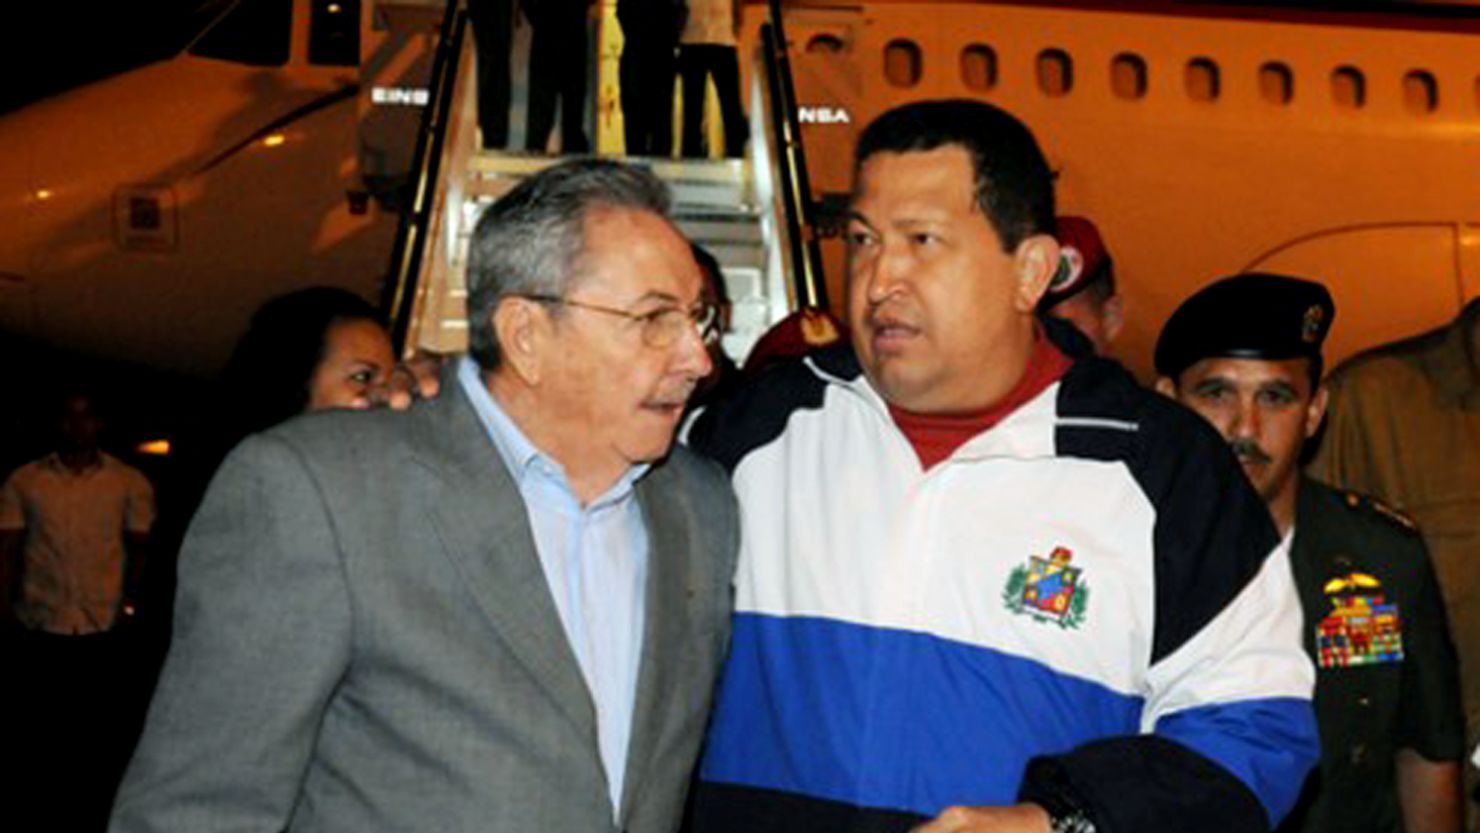 Cuban President Raul Castro, left, greeted Venezuelan President Hugo Chavez on his arrival in Cuba last week.